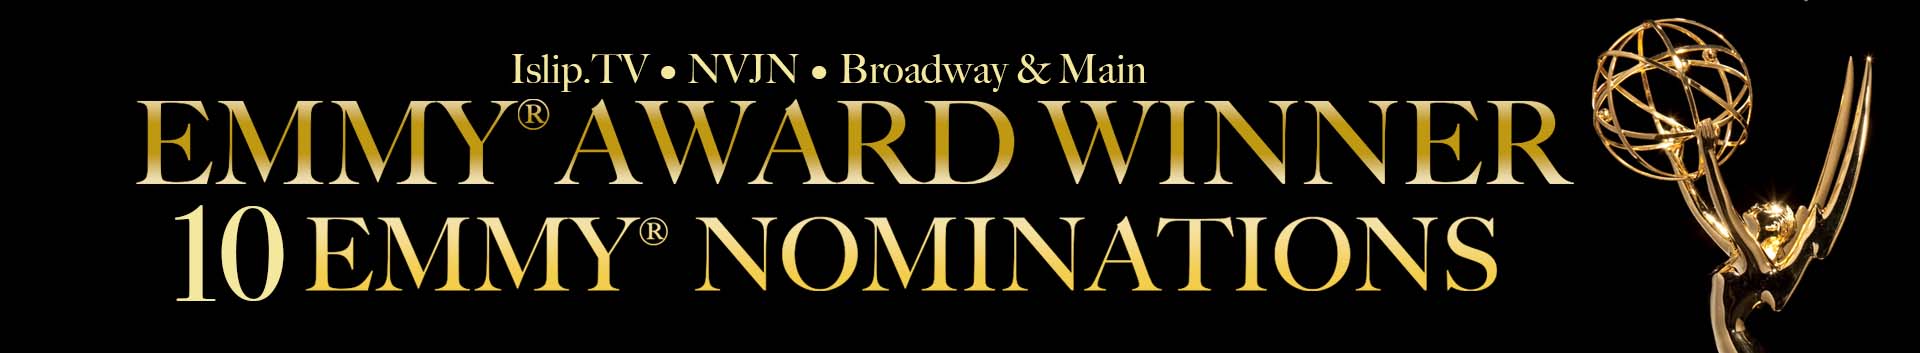 Islip.TV NVJN & Broadway and Main - 8 Emmy Nominations